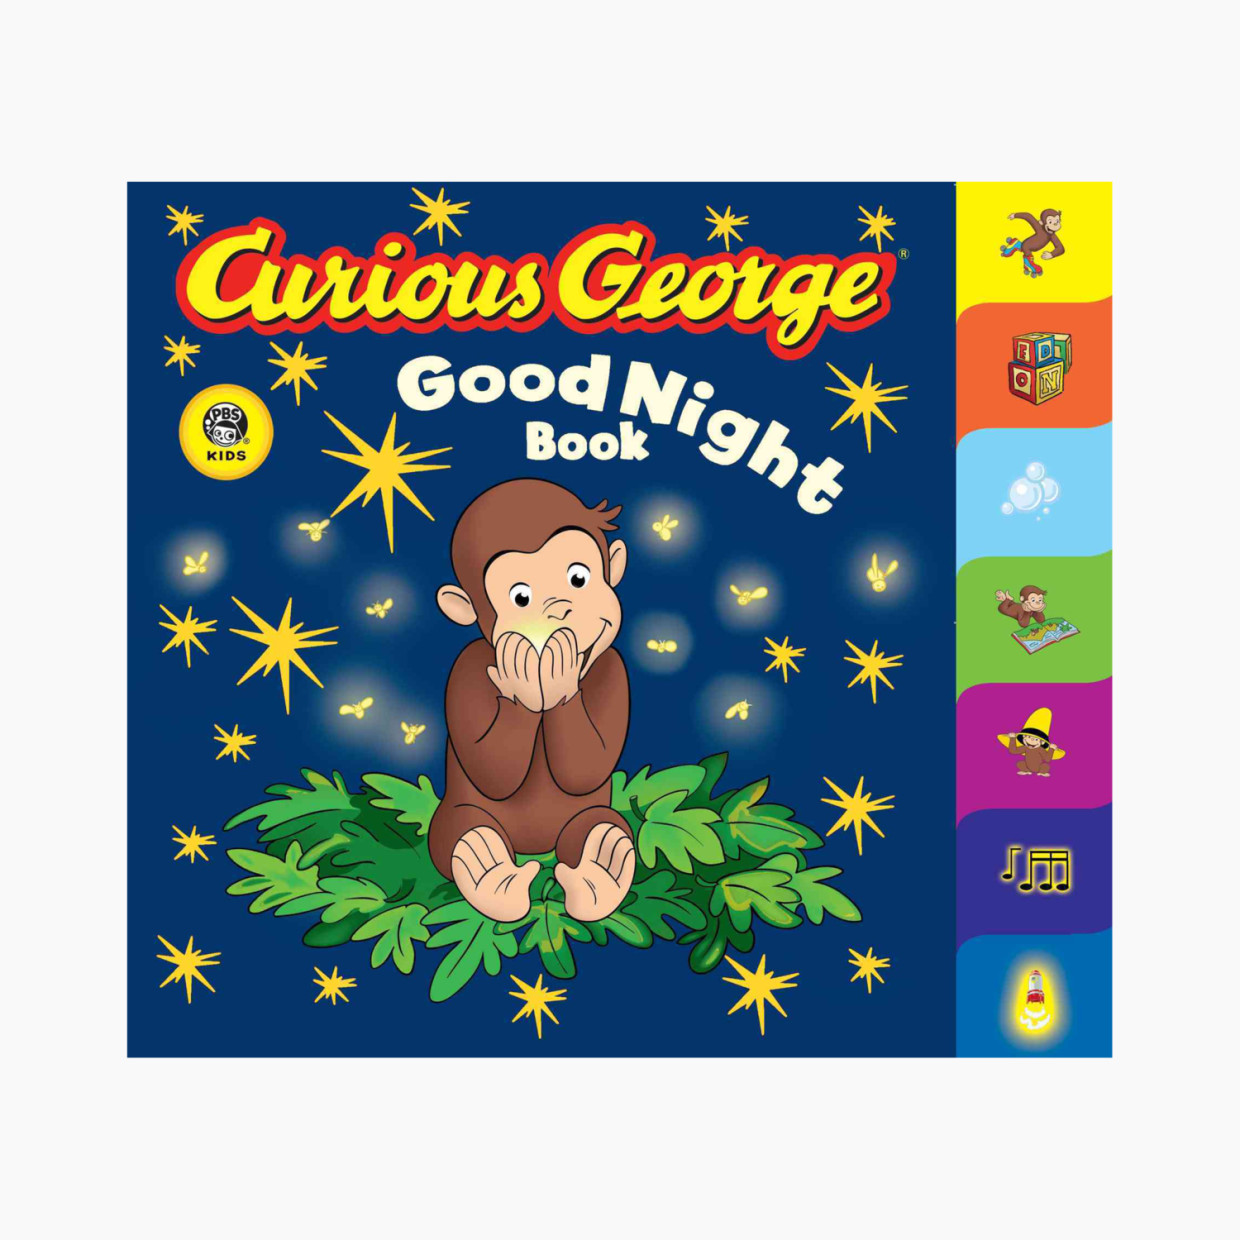 Curious George Good Night Book.